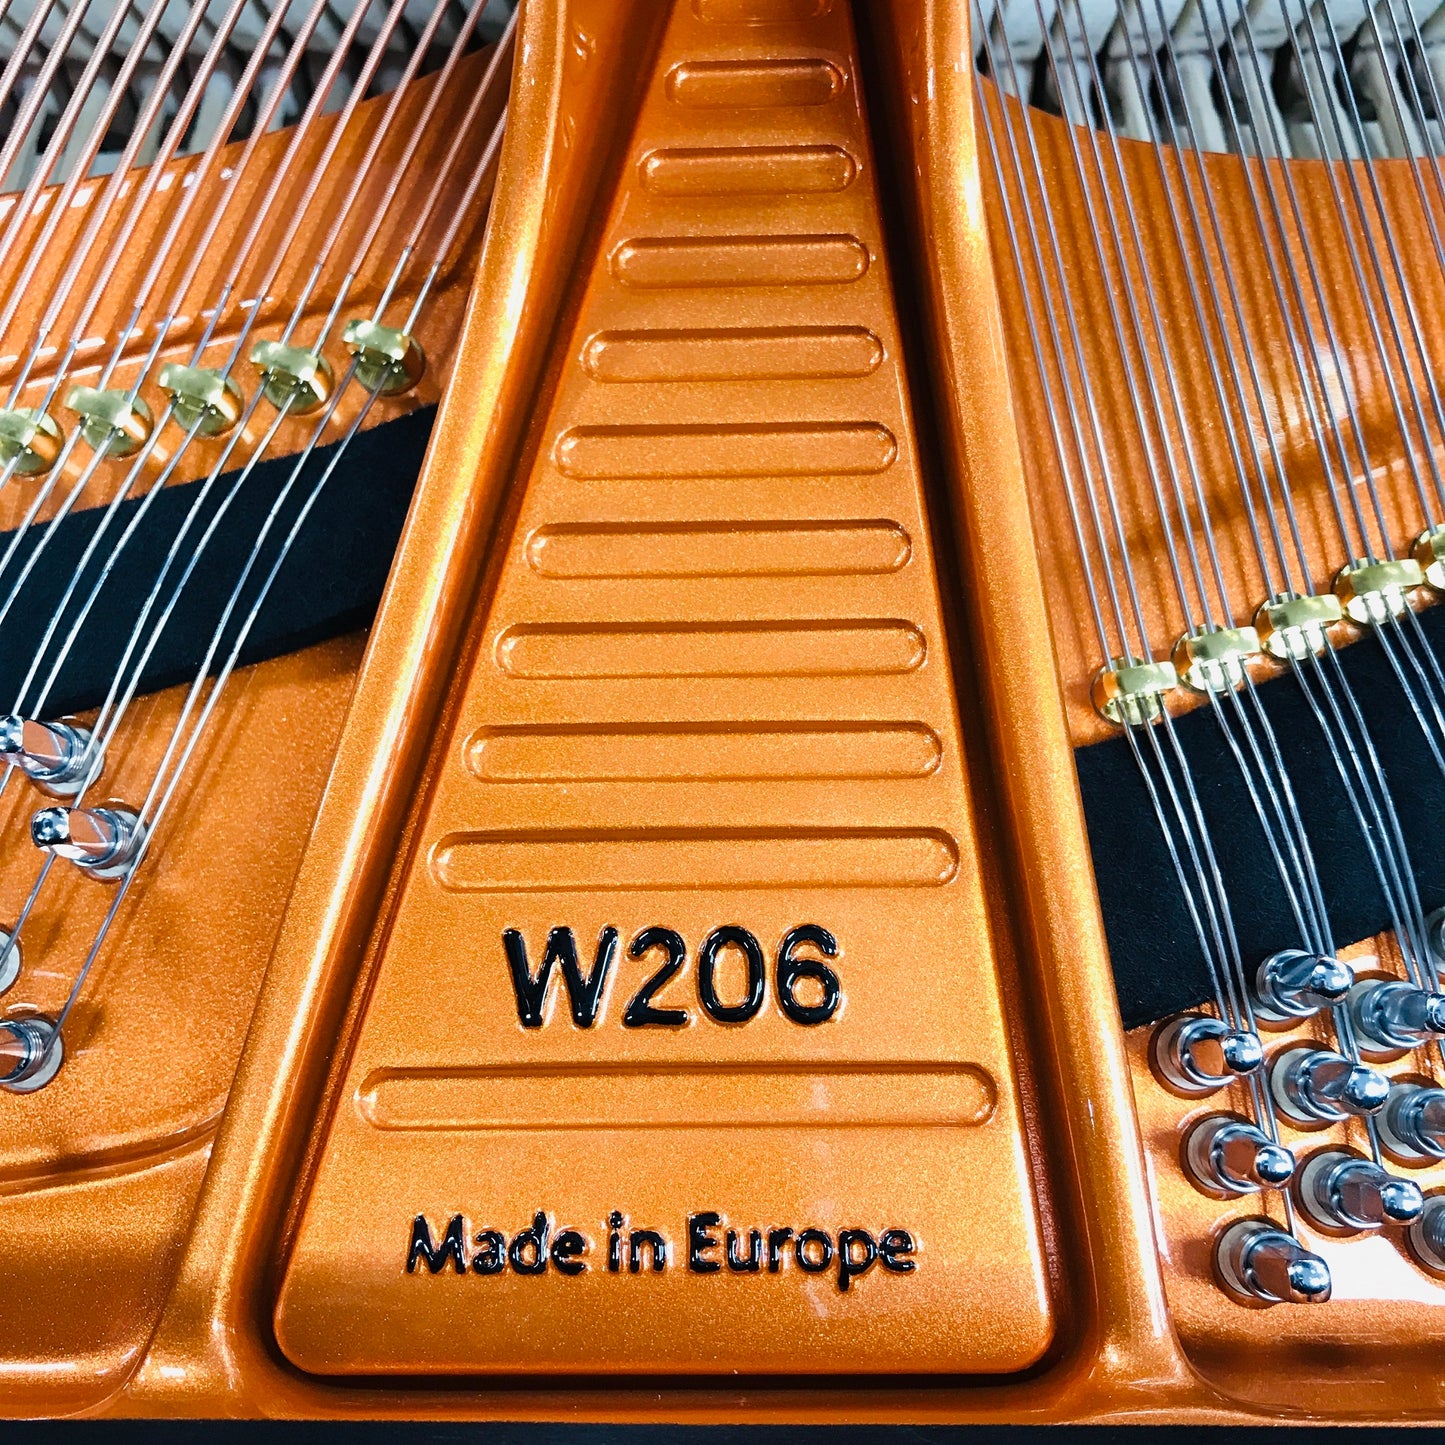 Schimmel W206 Grand Piano